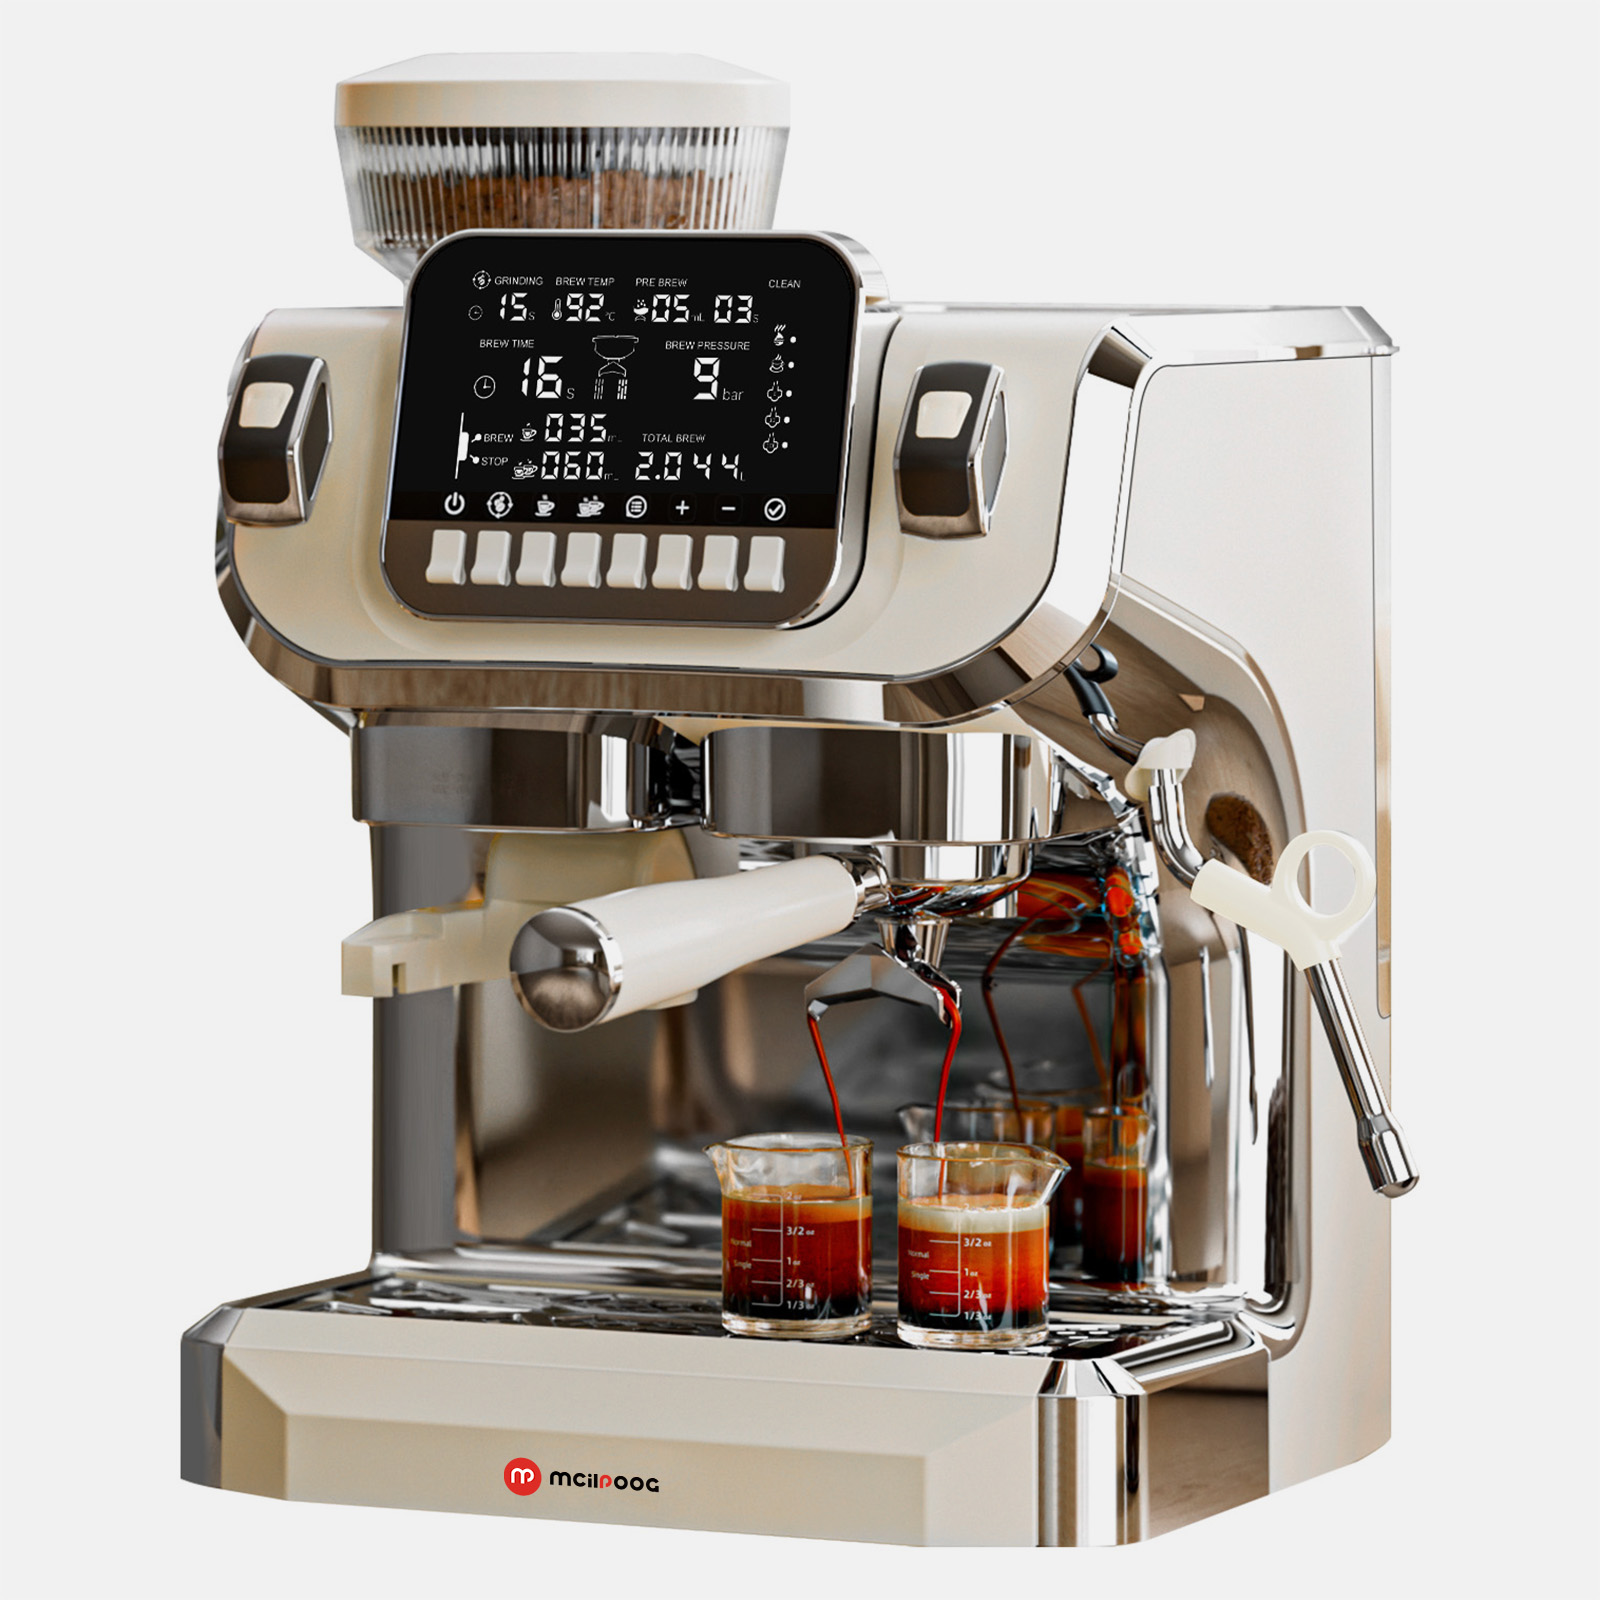 Mcilpoog TC530 Espresso Machine with Grinder，Semi Automatic